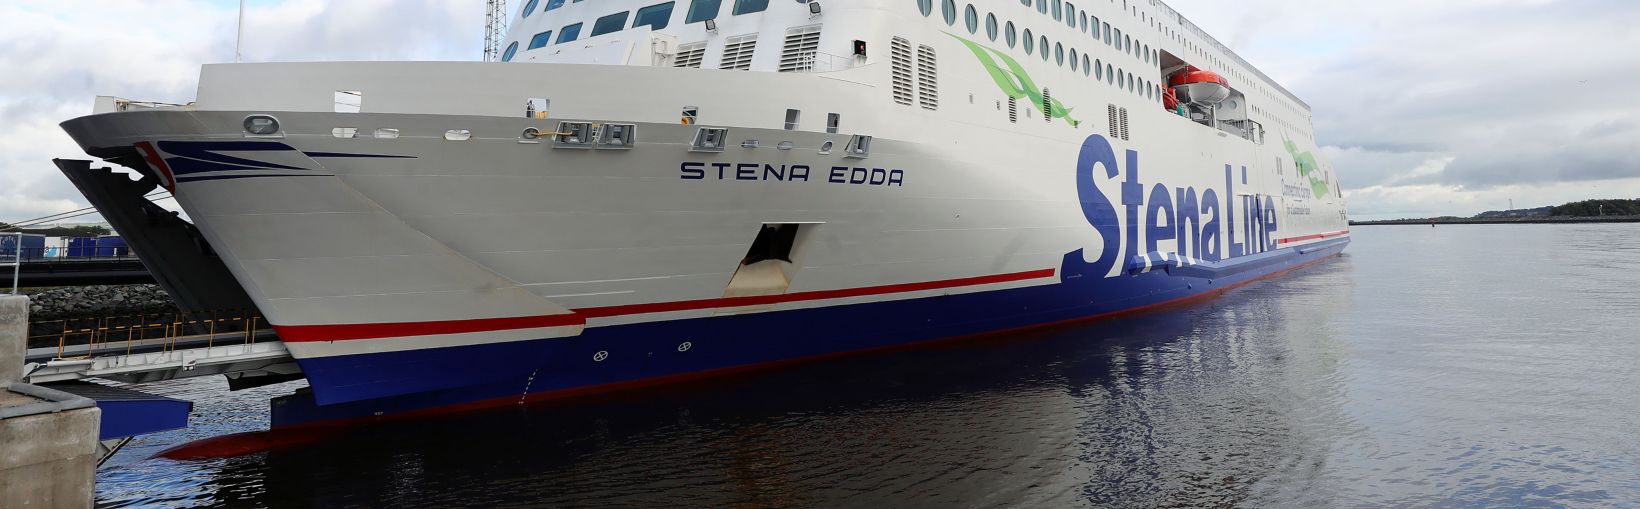 Le ferry Stena Edda amarré au port de Belfast